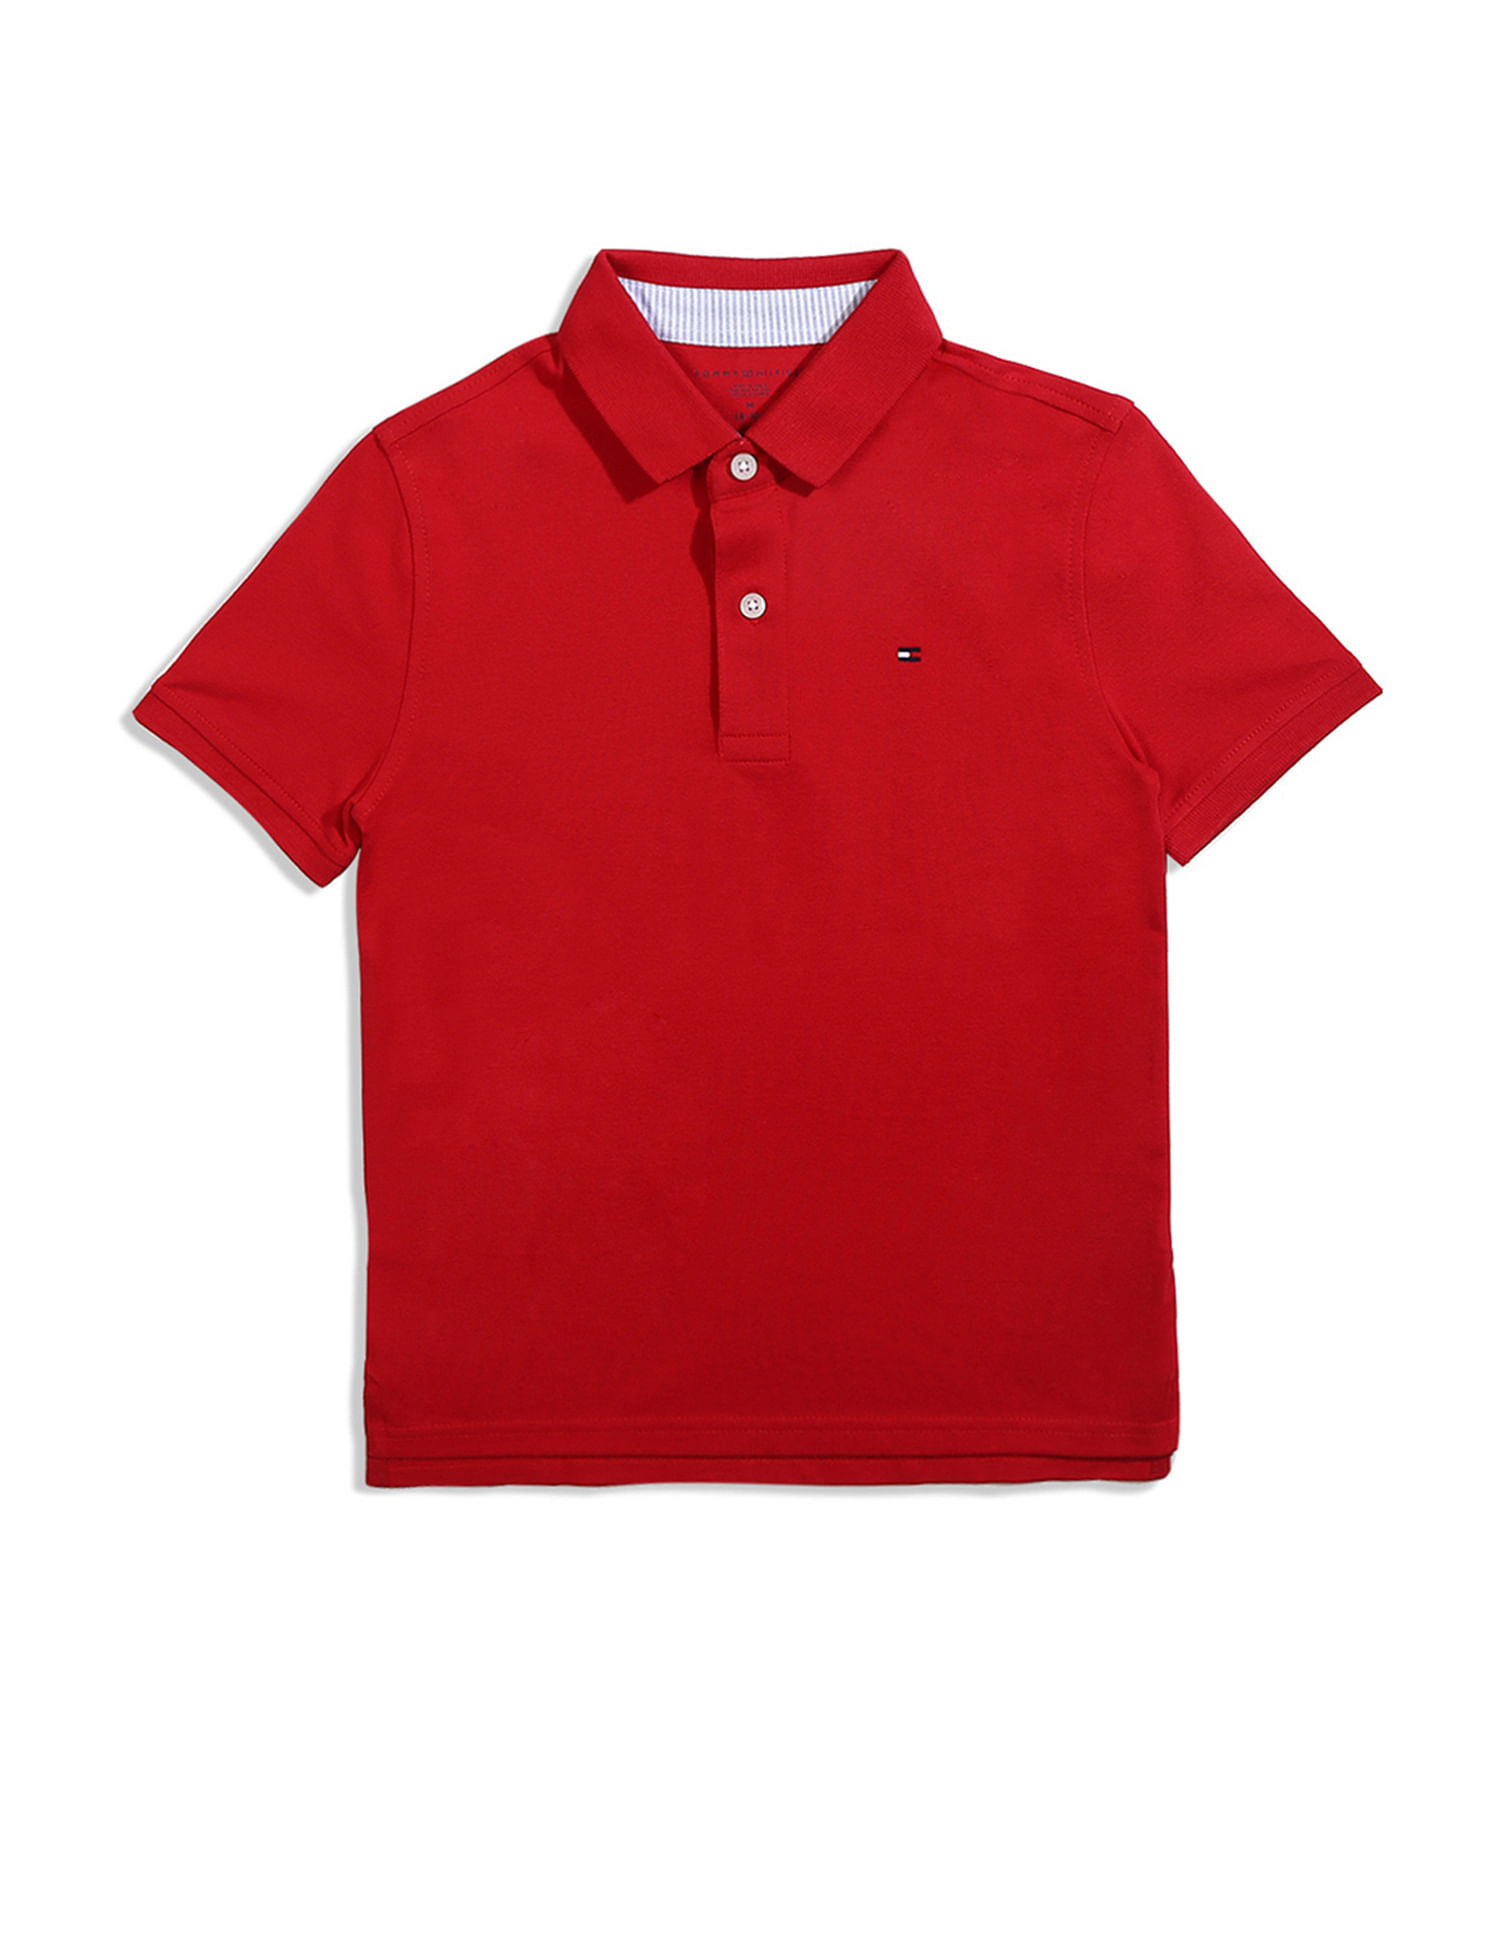 Buy Tommy Hilfiger Kids Solid Stretch Polo Shirt - NNNOW.com